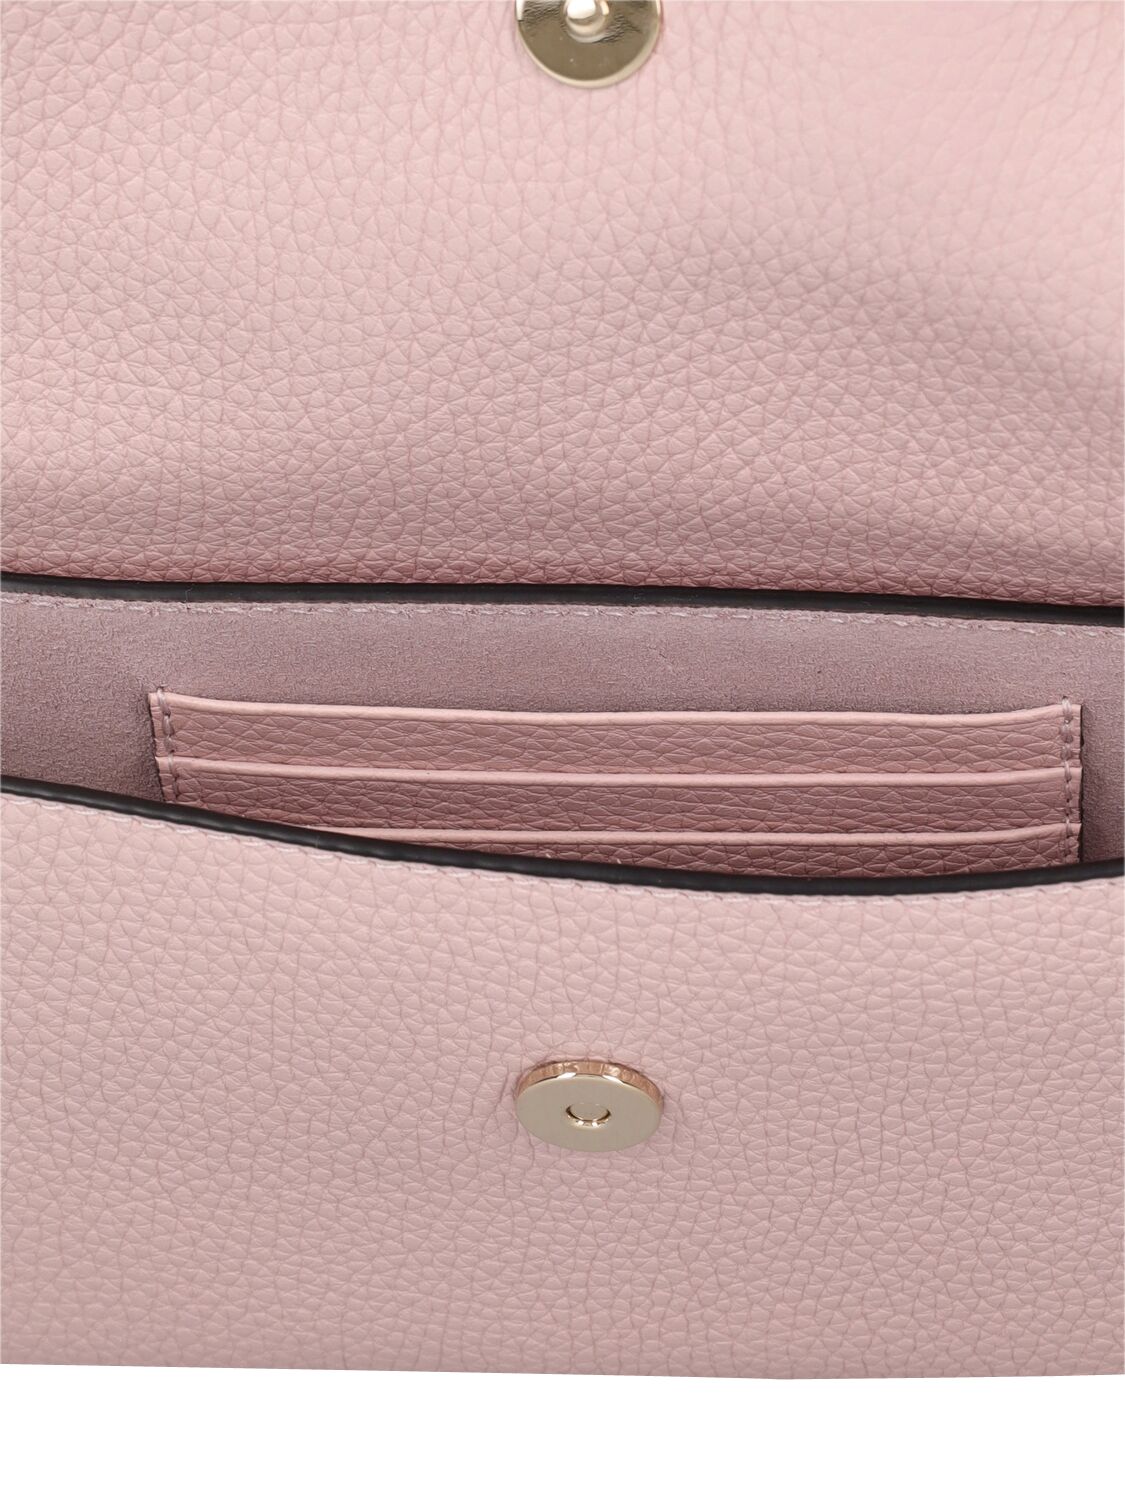 Shop Valentino Small Rockstud Leather Top Handle Bag In Rose Quartz